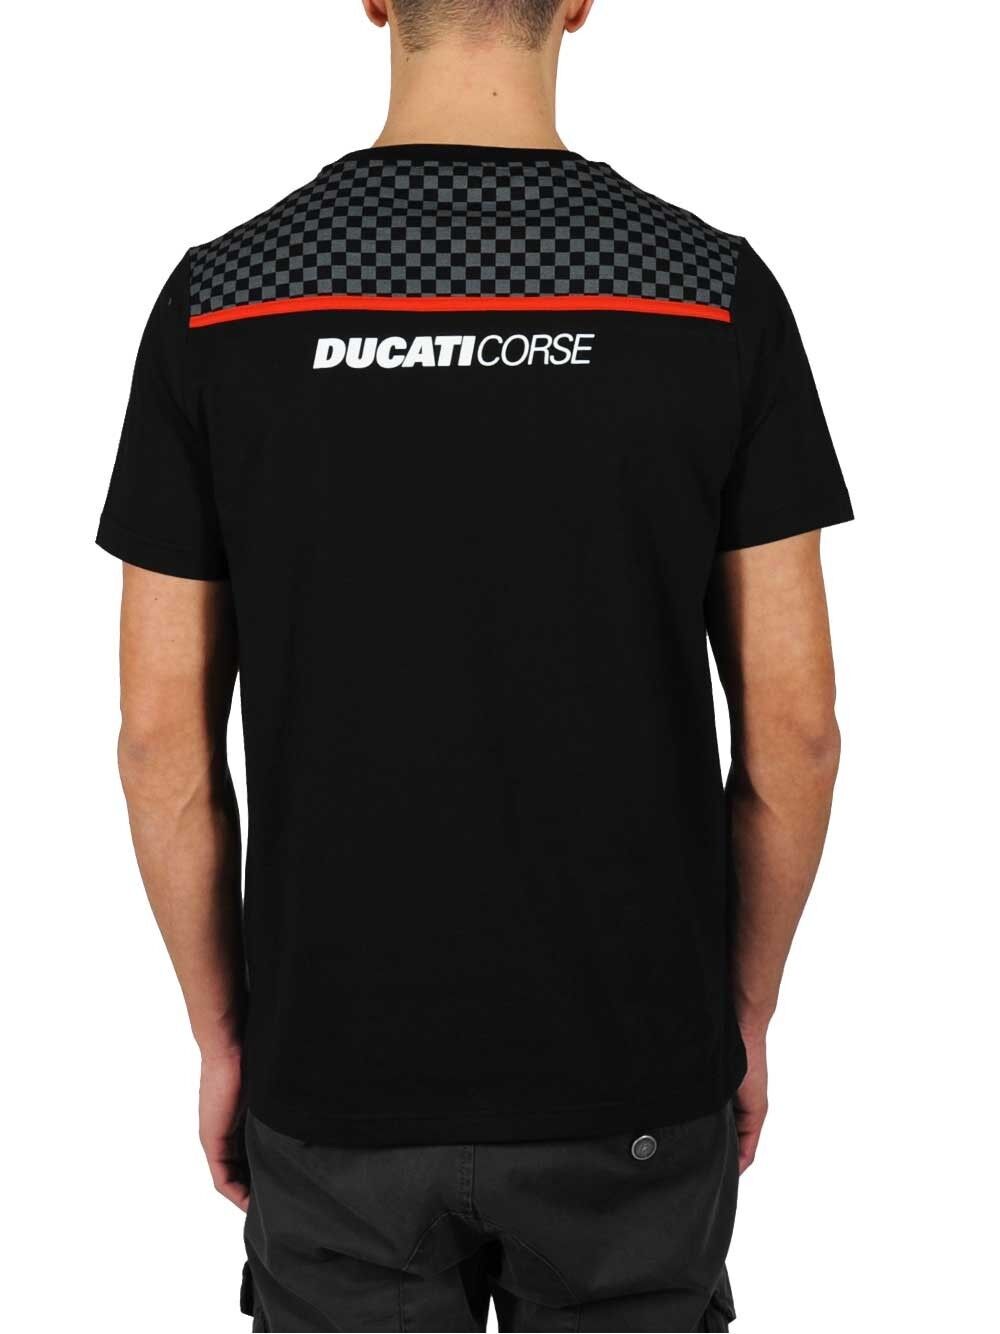 New Official Ducati Corse Black T'Shirt - 15 36003